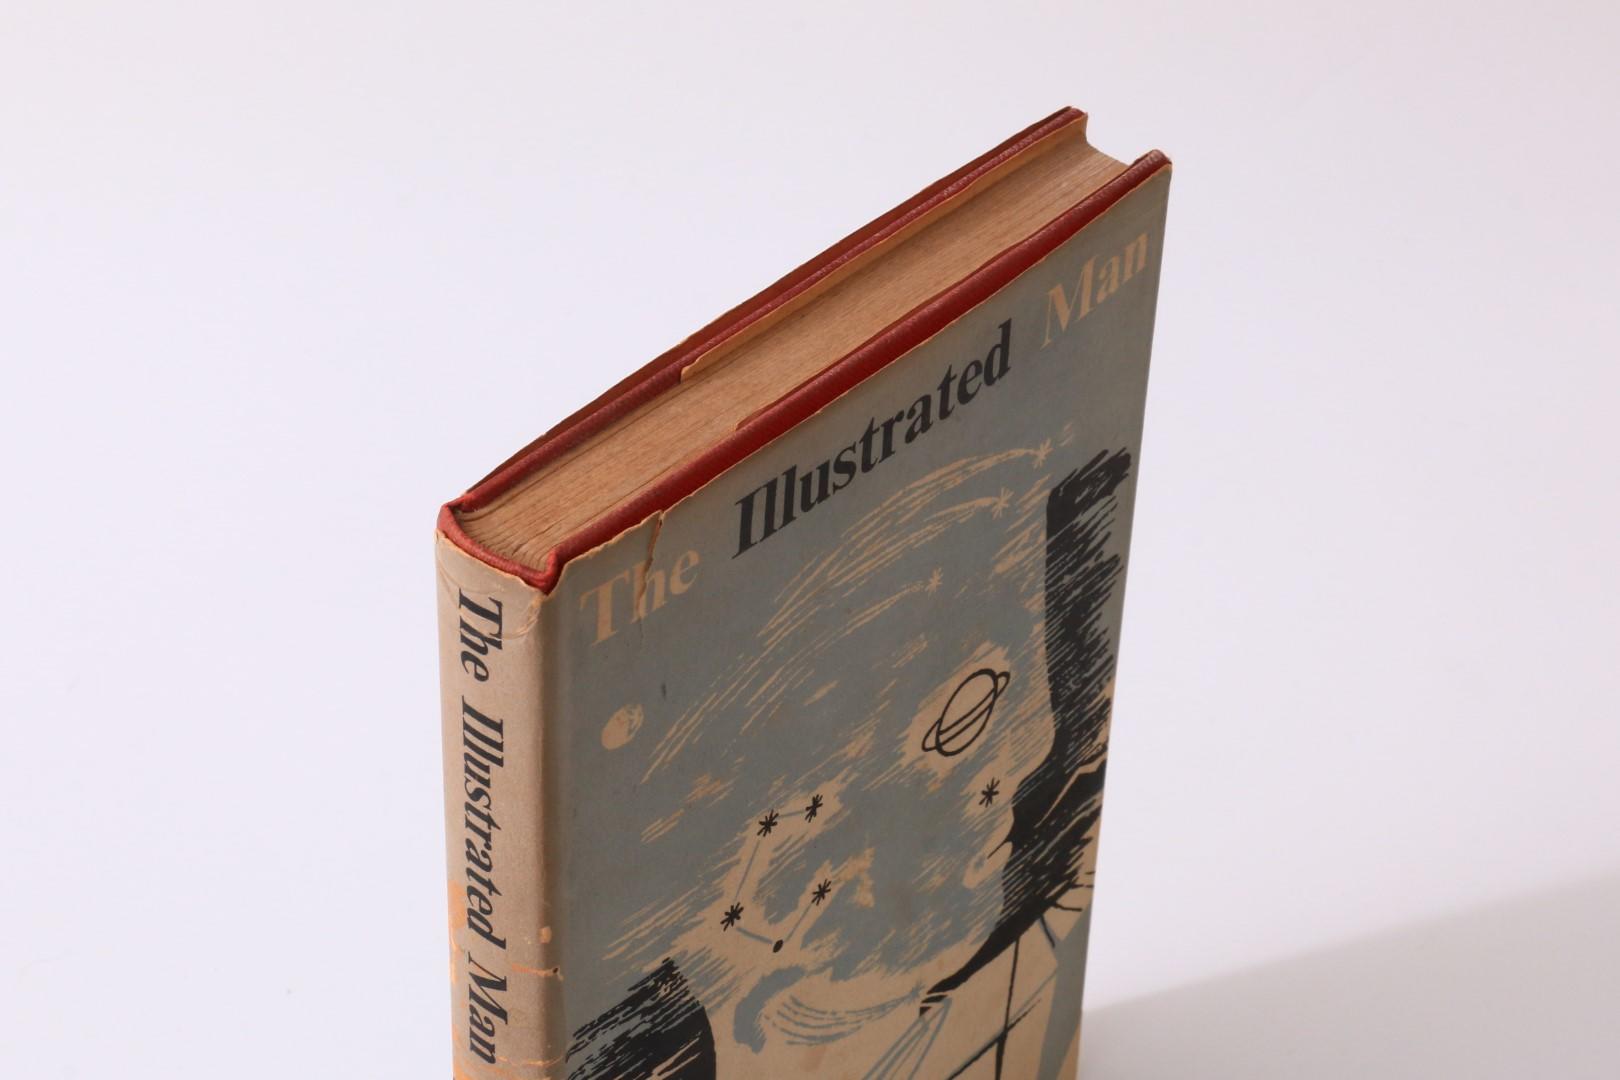 Ray Bradbury - The Illustrated Man - Rupert Hart-Davis, 1952, First Edition.